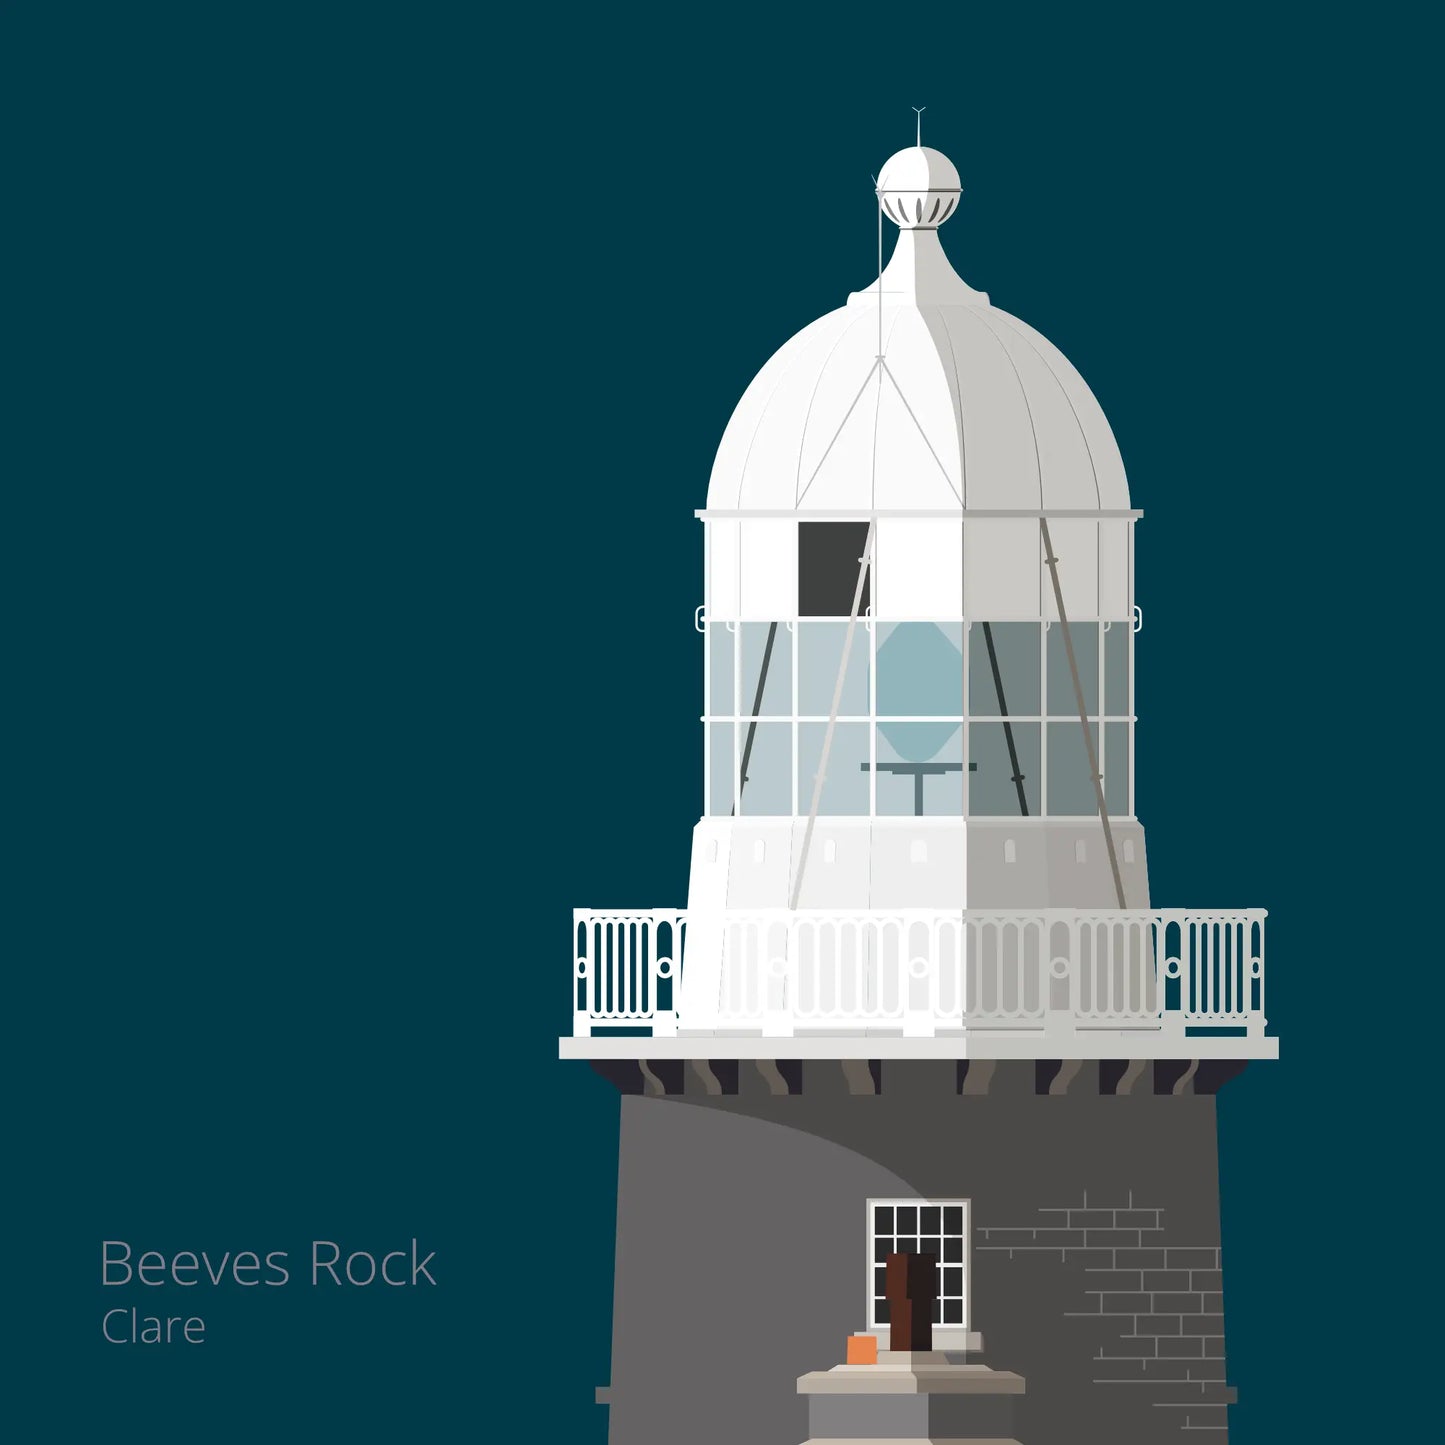 Illustration of Tuskar Rock lighthouse on a midnight blue background